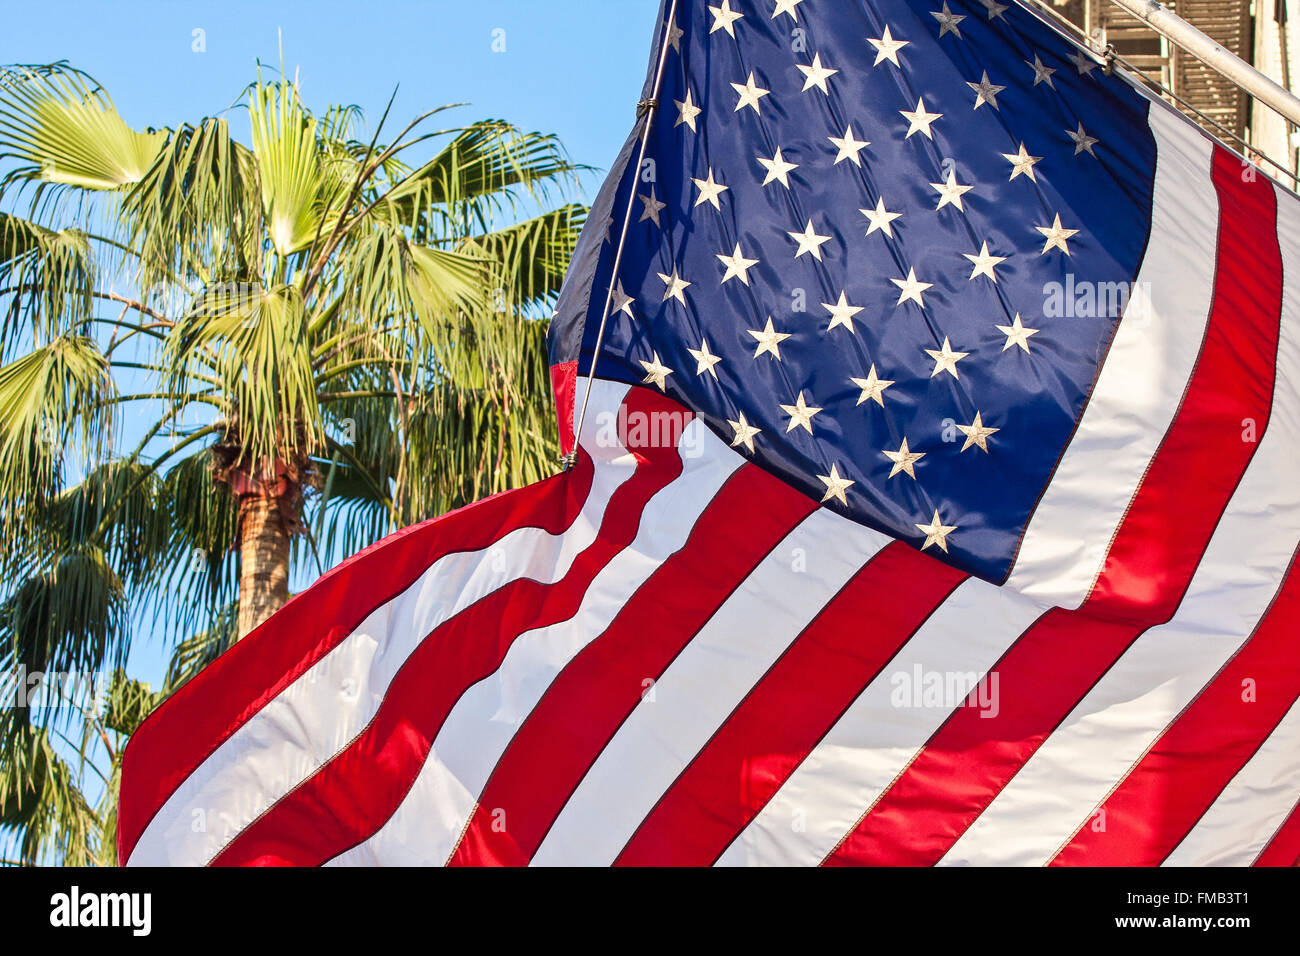 american flag palm tree